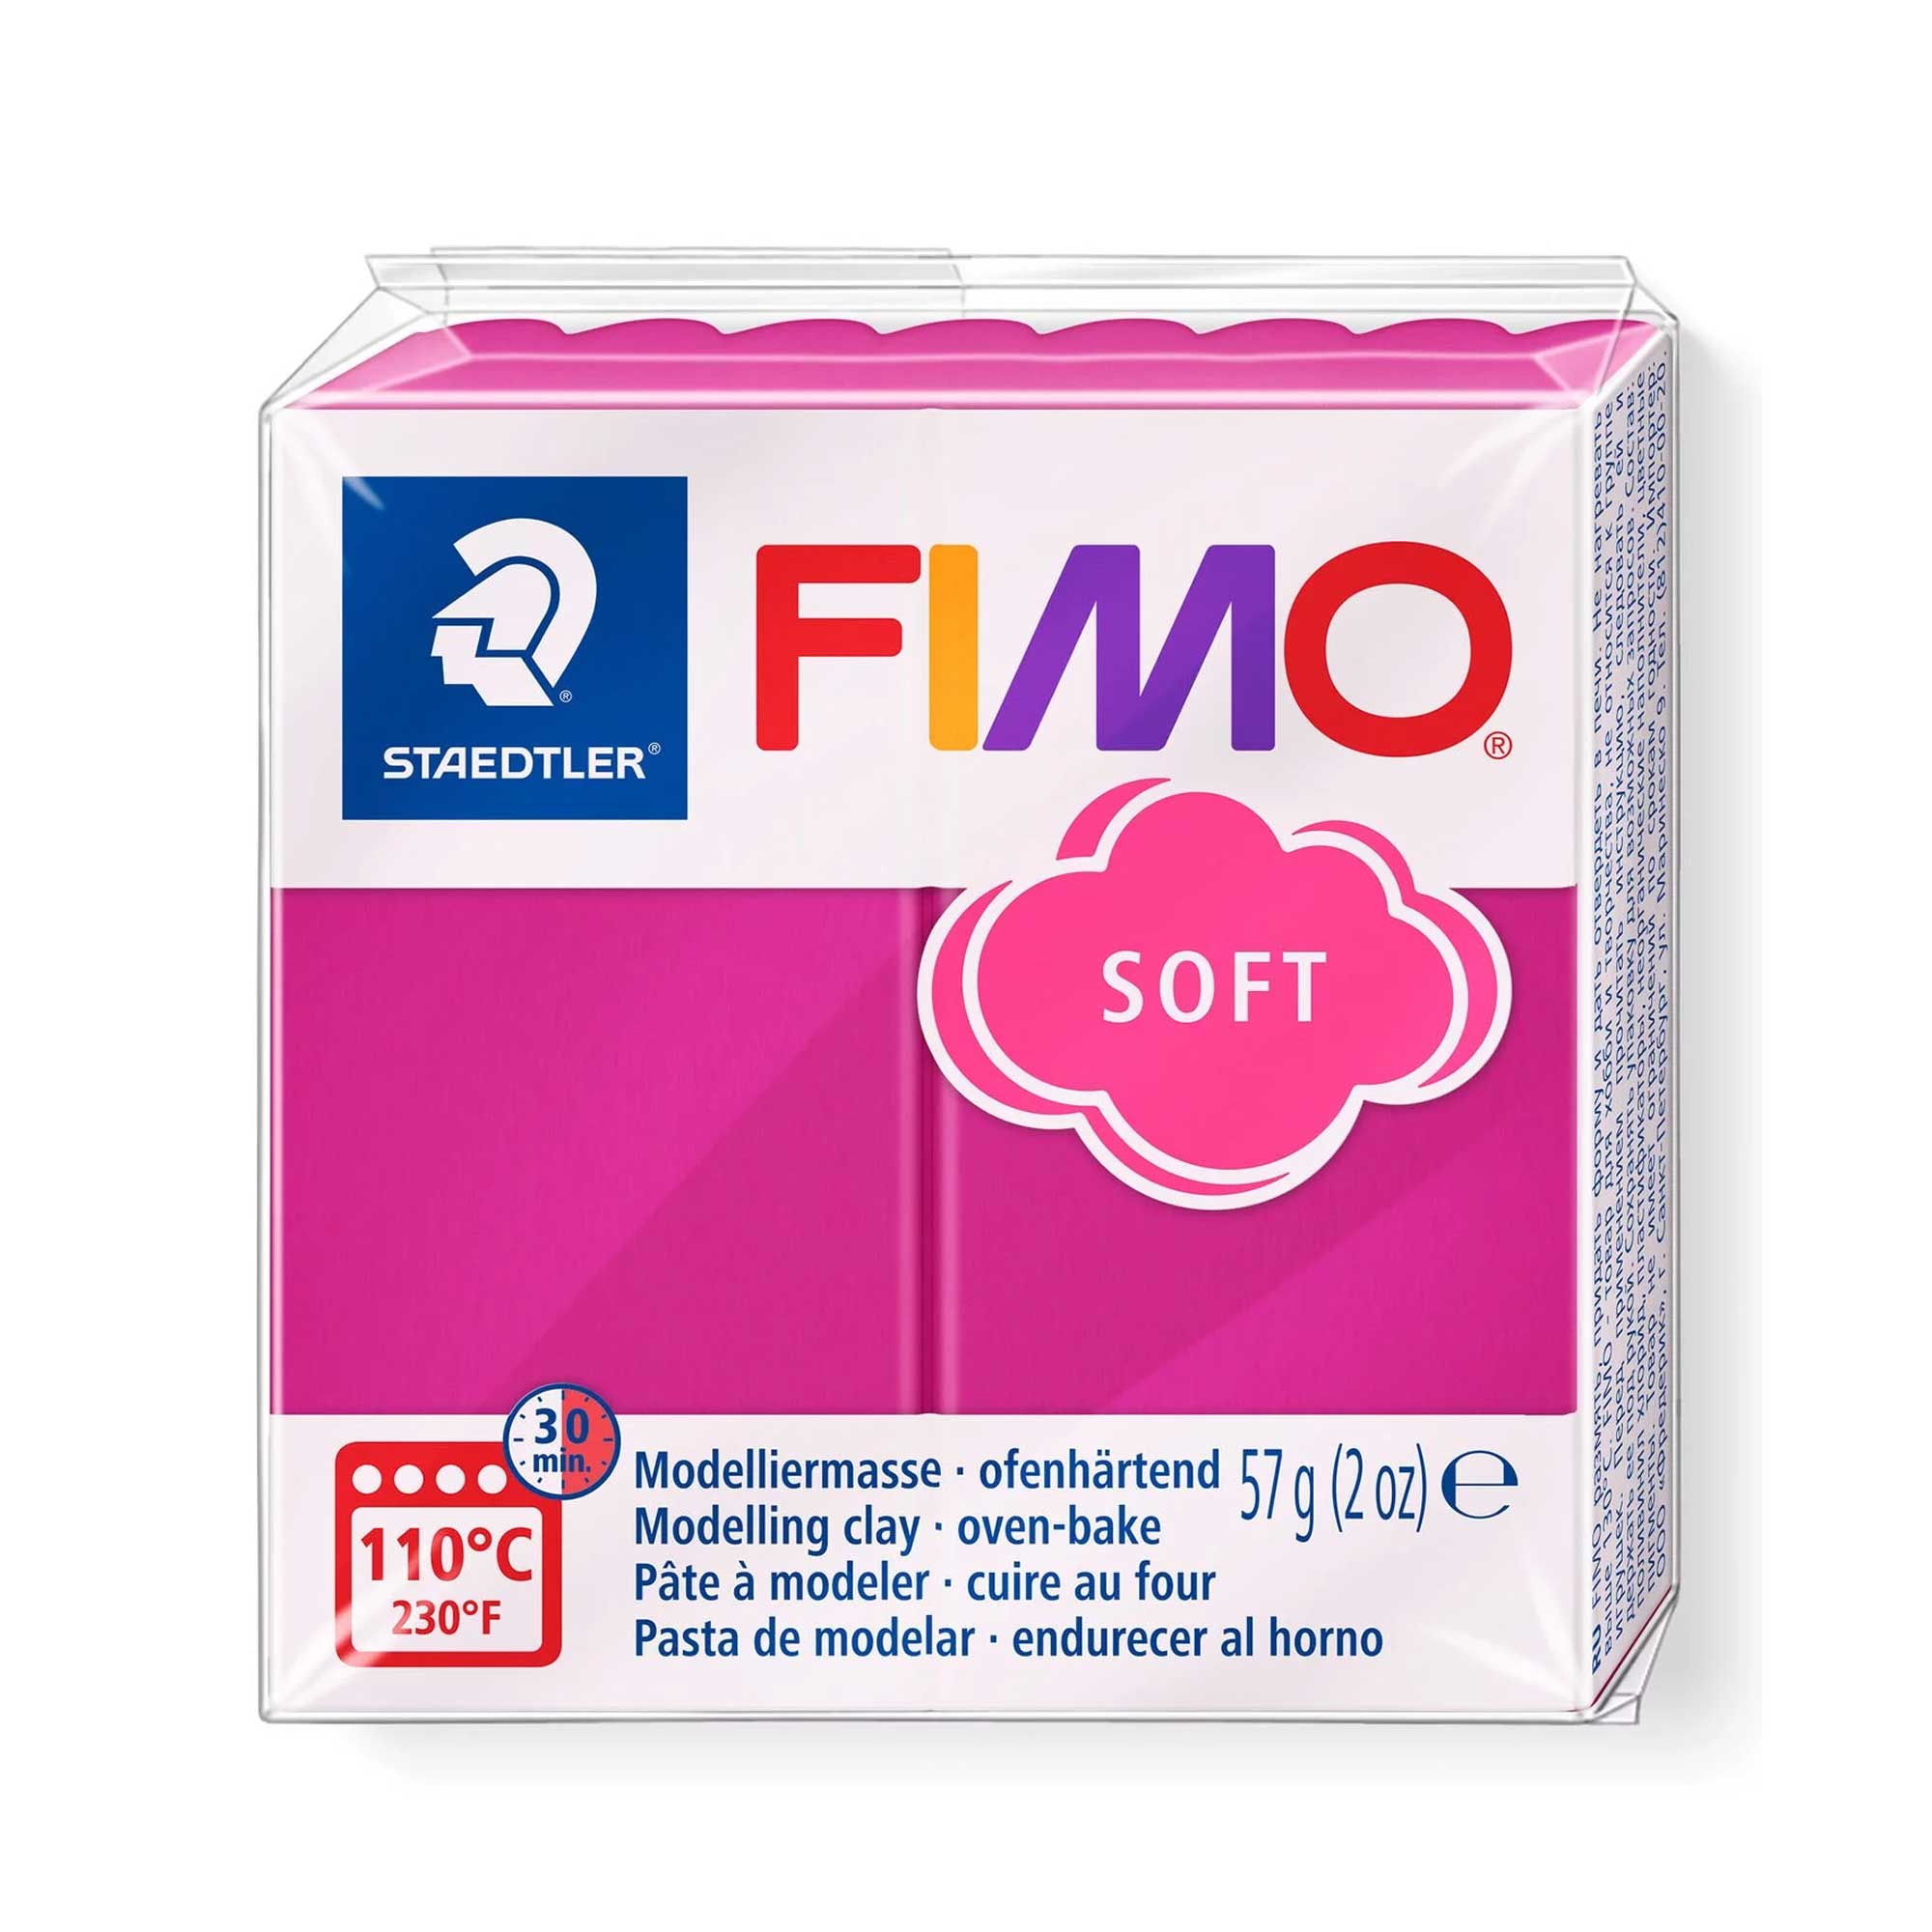 Staedtler FIMO SOFT Modelling Blocks - 57g